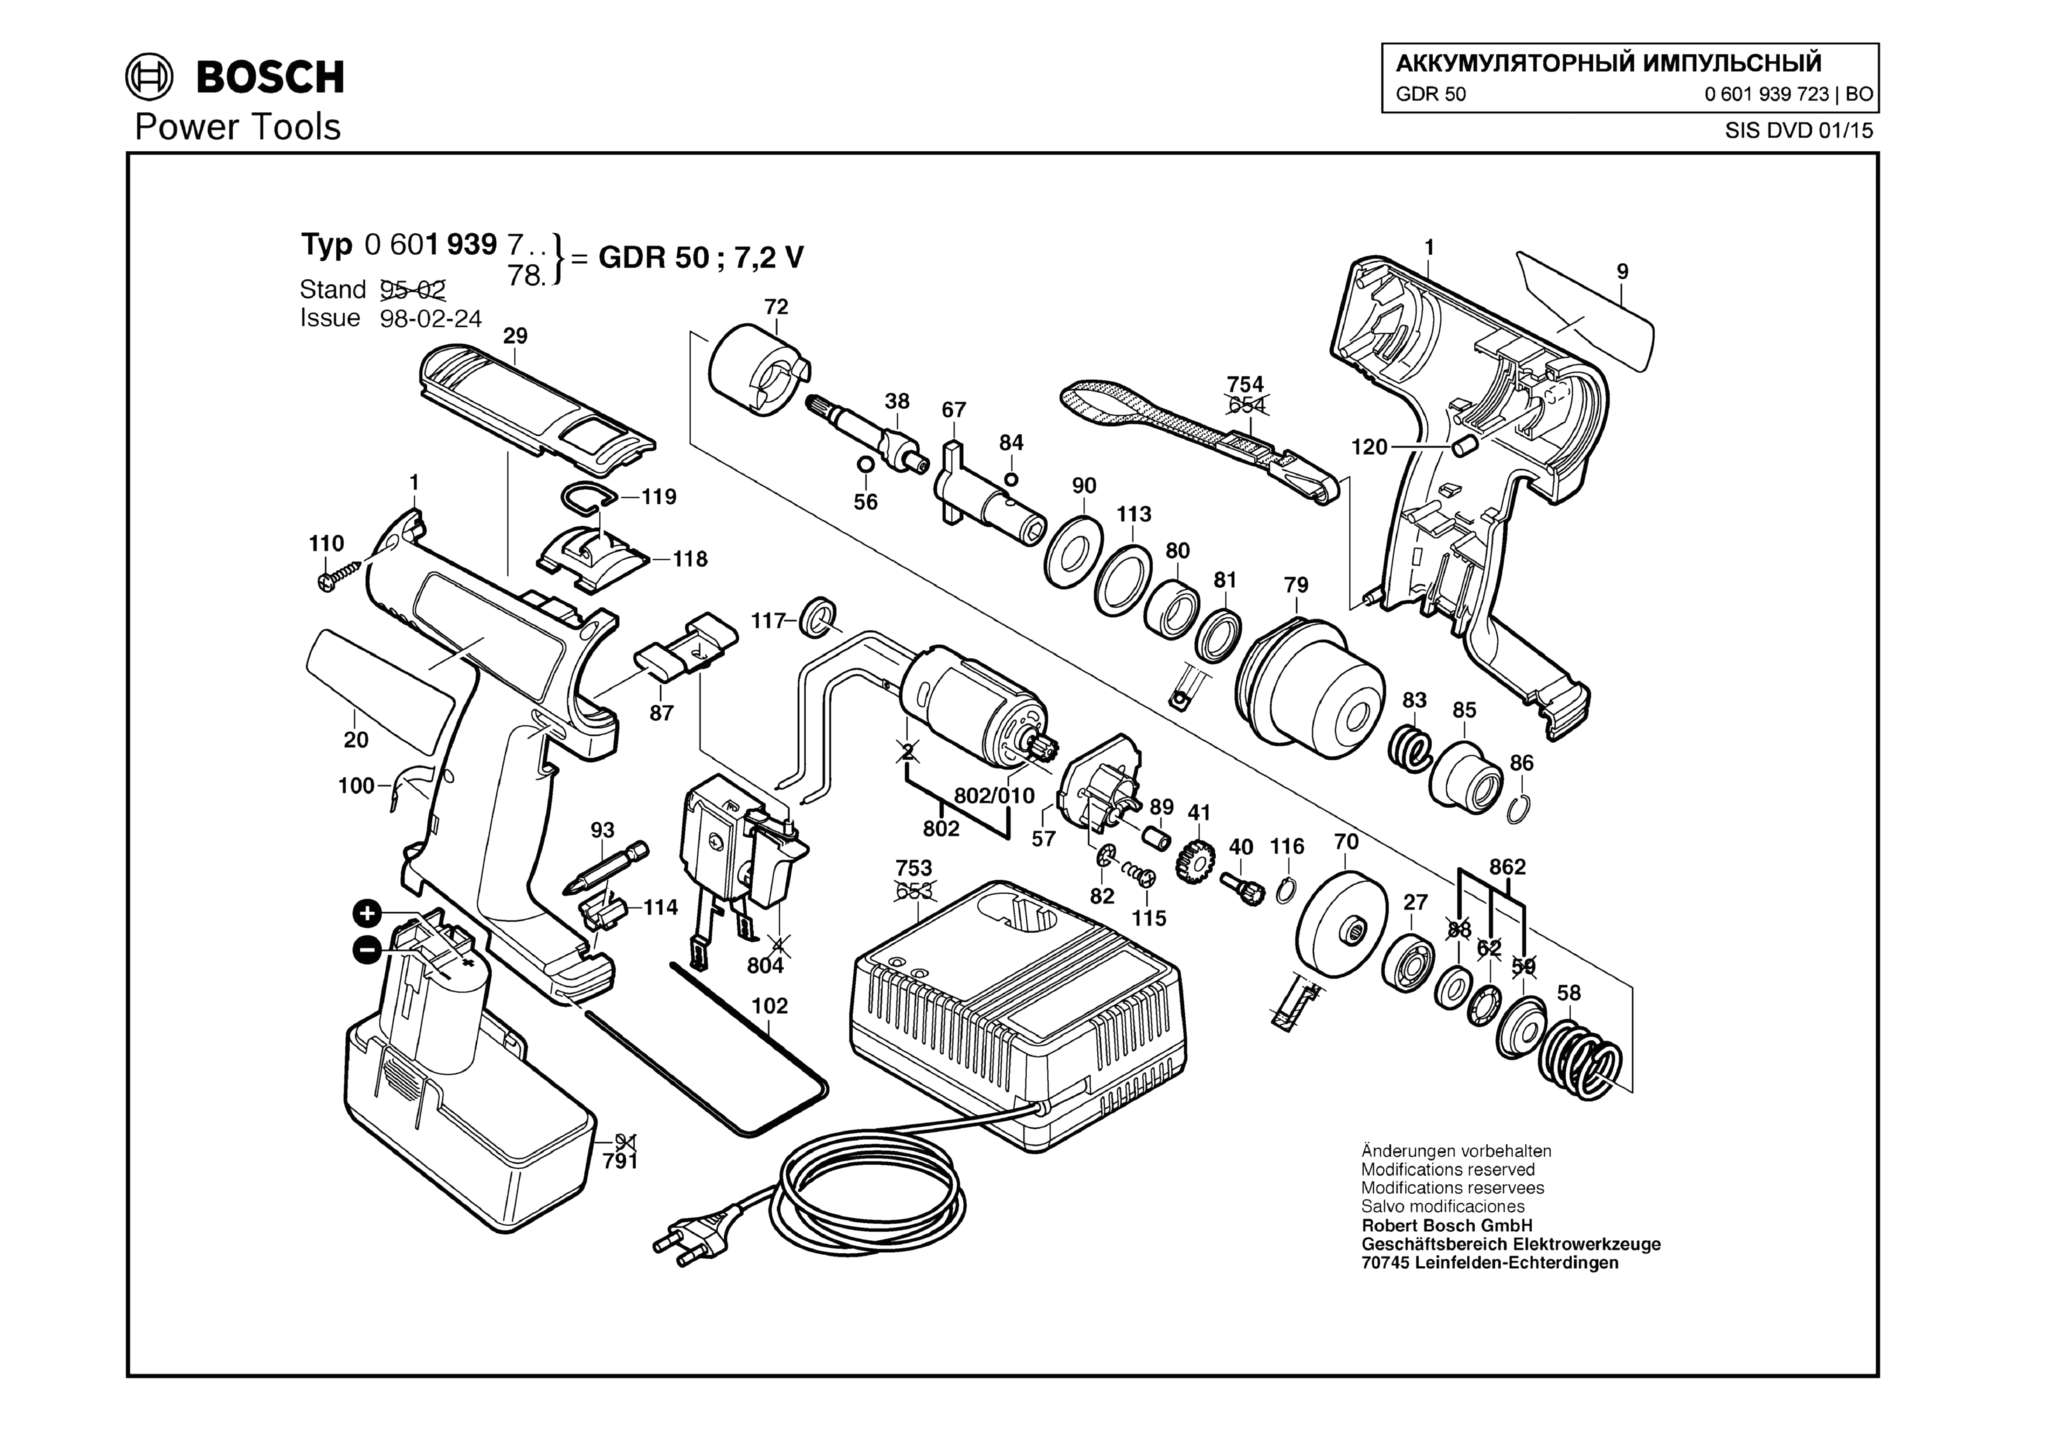 Запчасти, схема и деталировка Bosch GDR 50 (ТИП 0601939723)